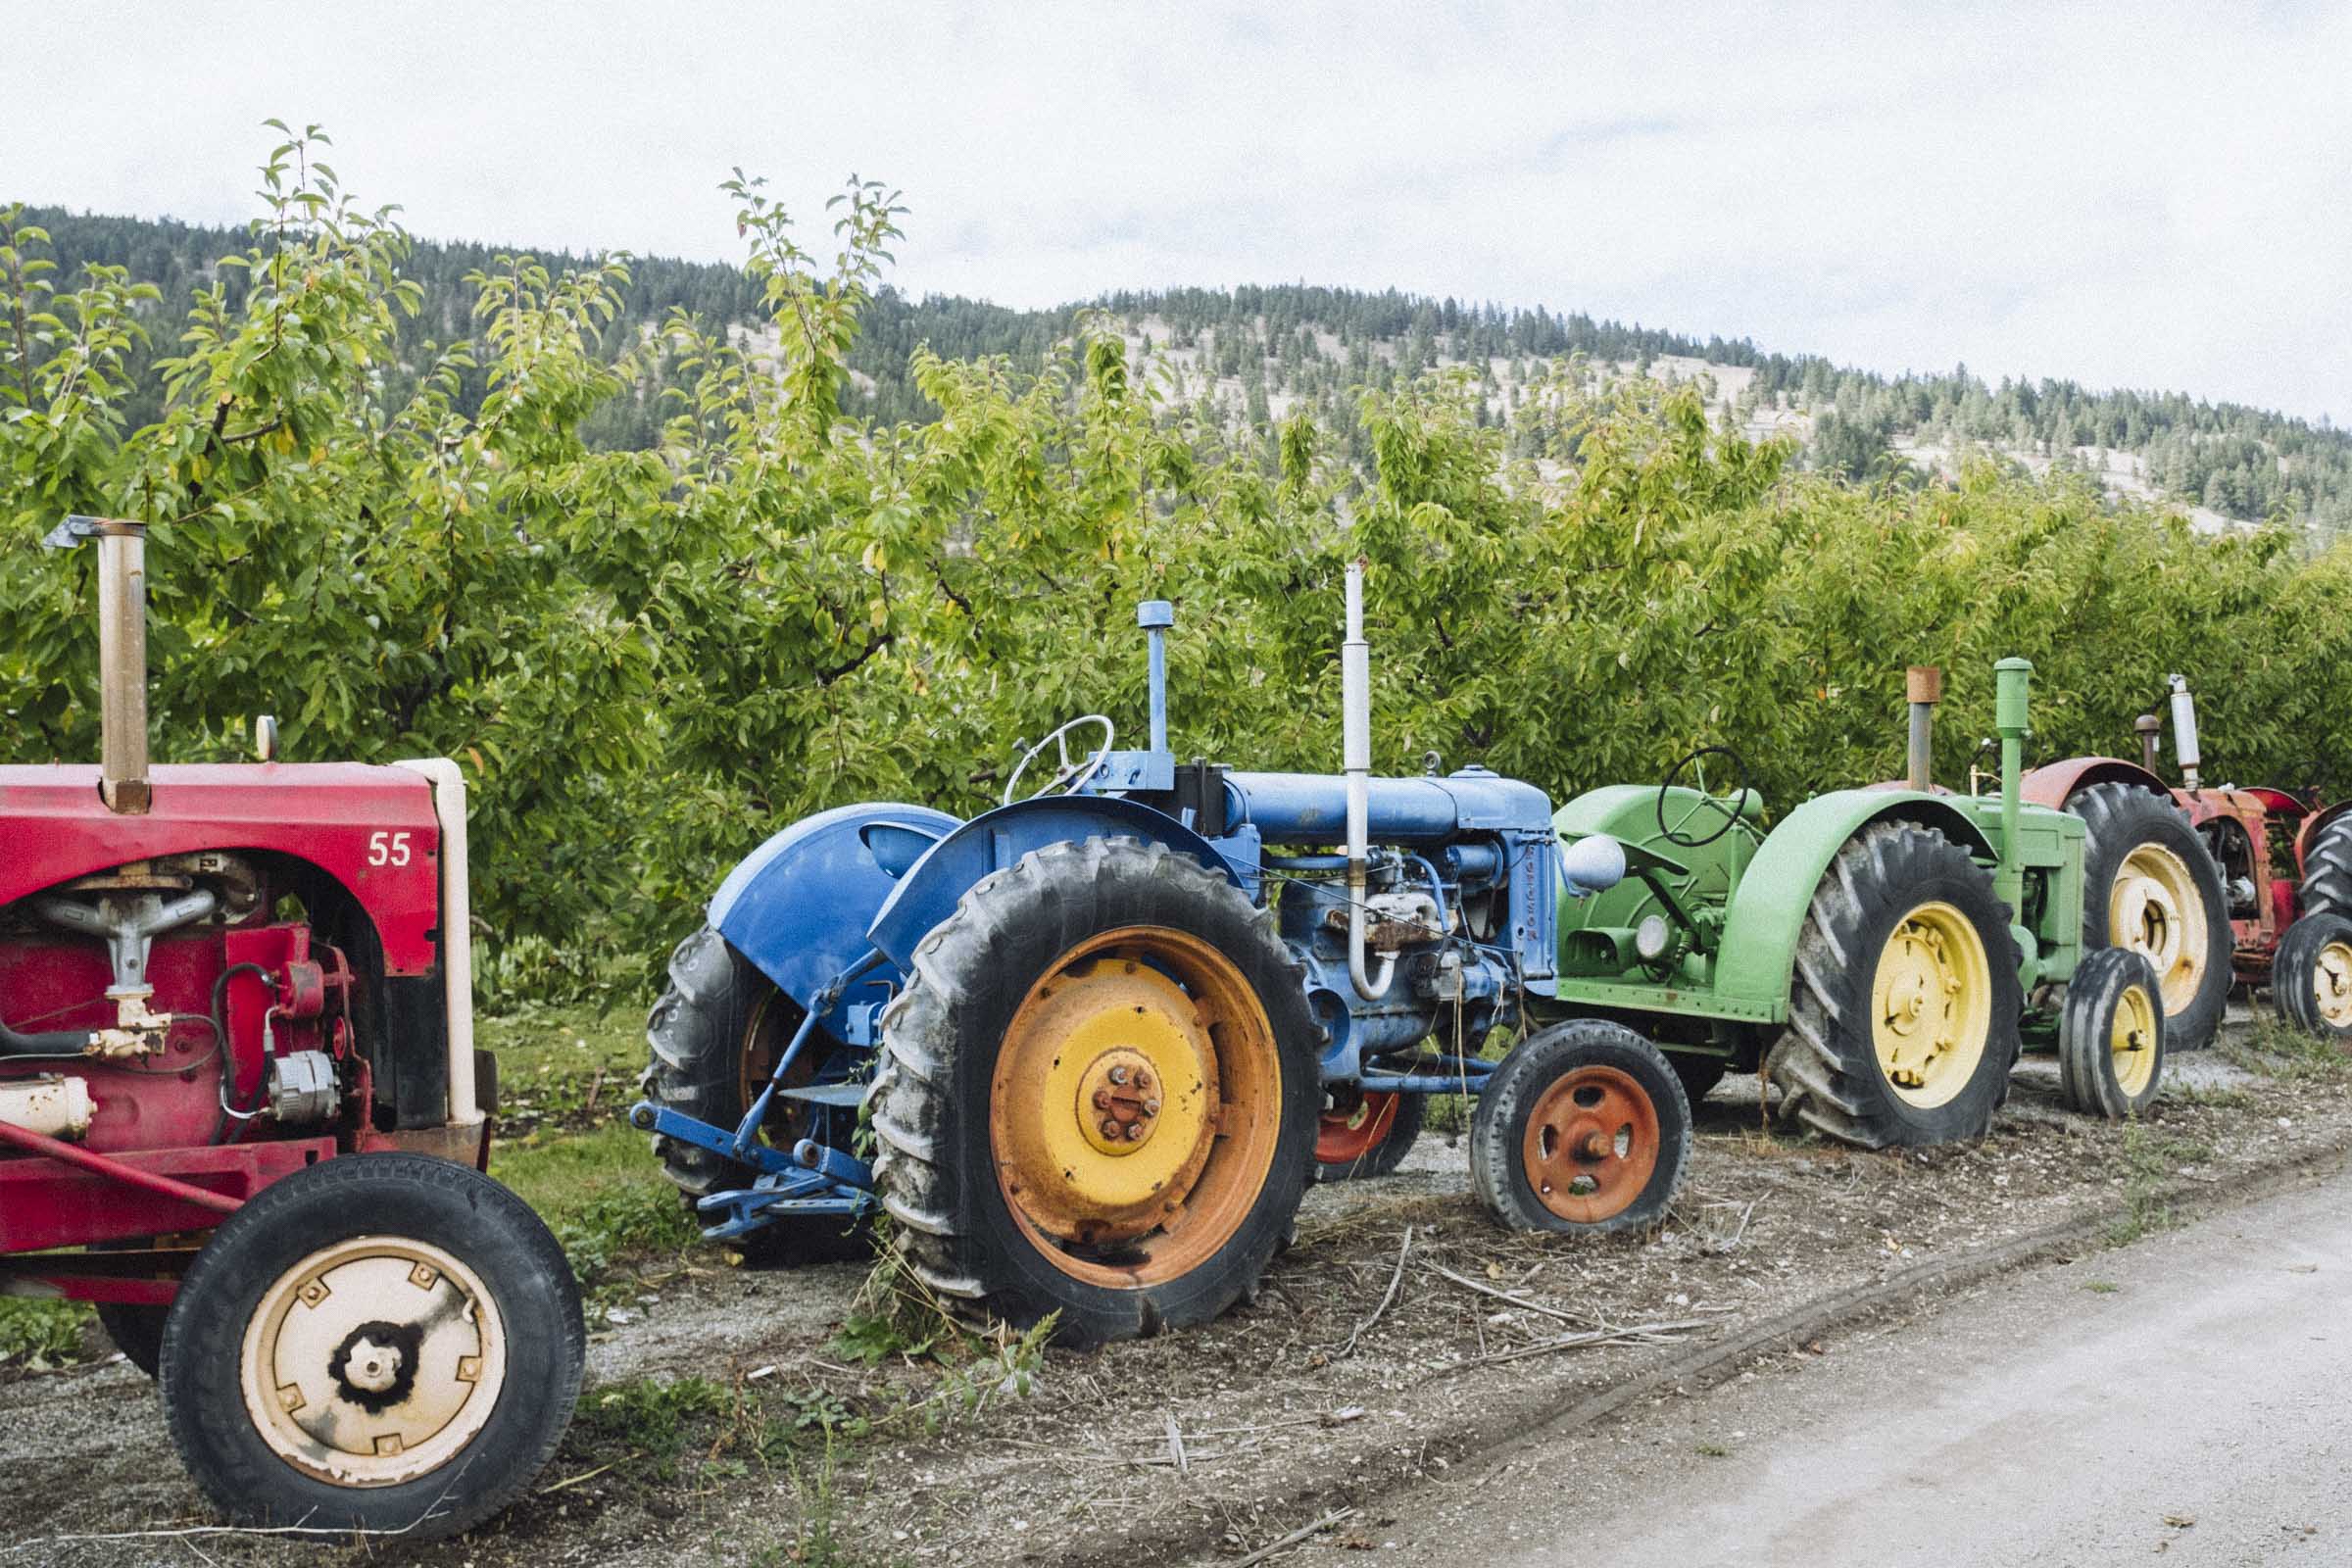 Colourful antique tractors at Gatzke Orchards